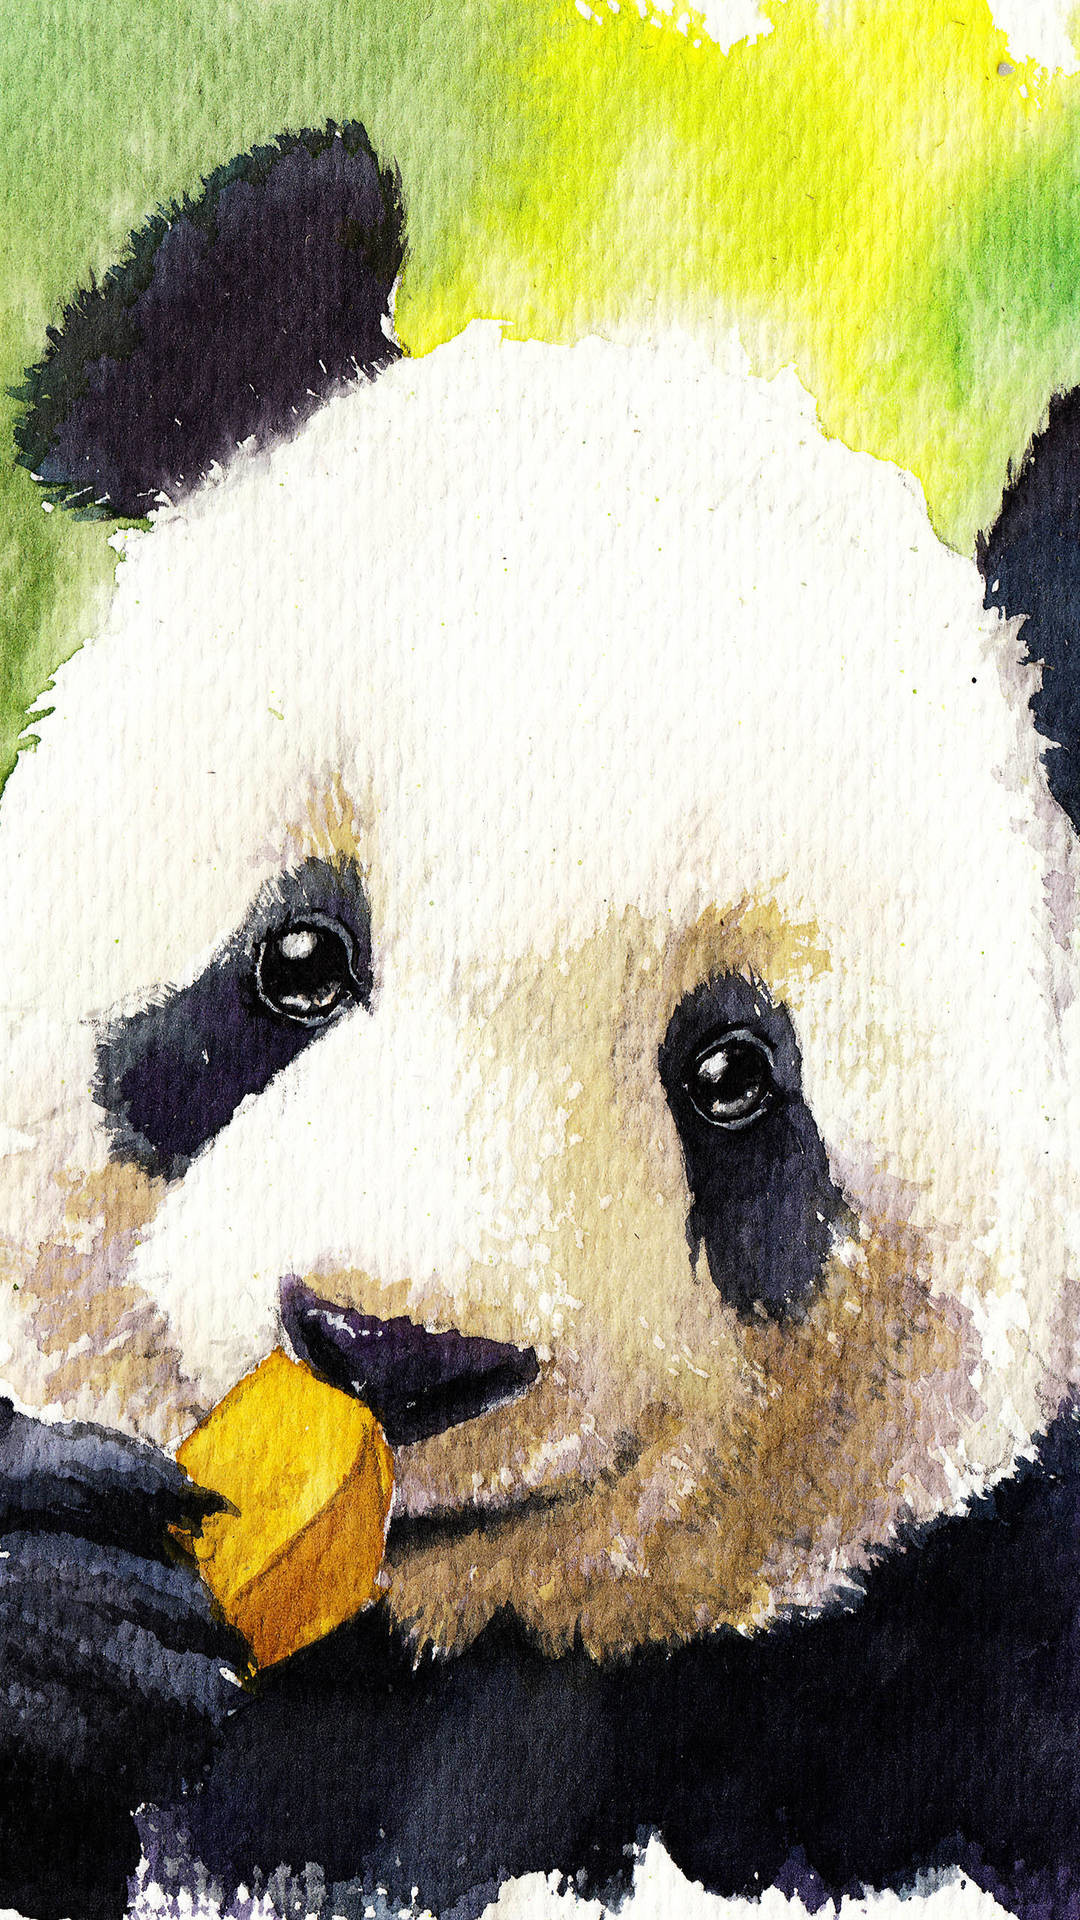 1080x1920 Panda eating banana. Two cute pandas